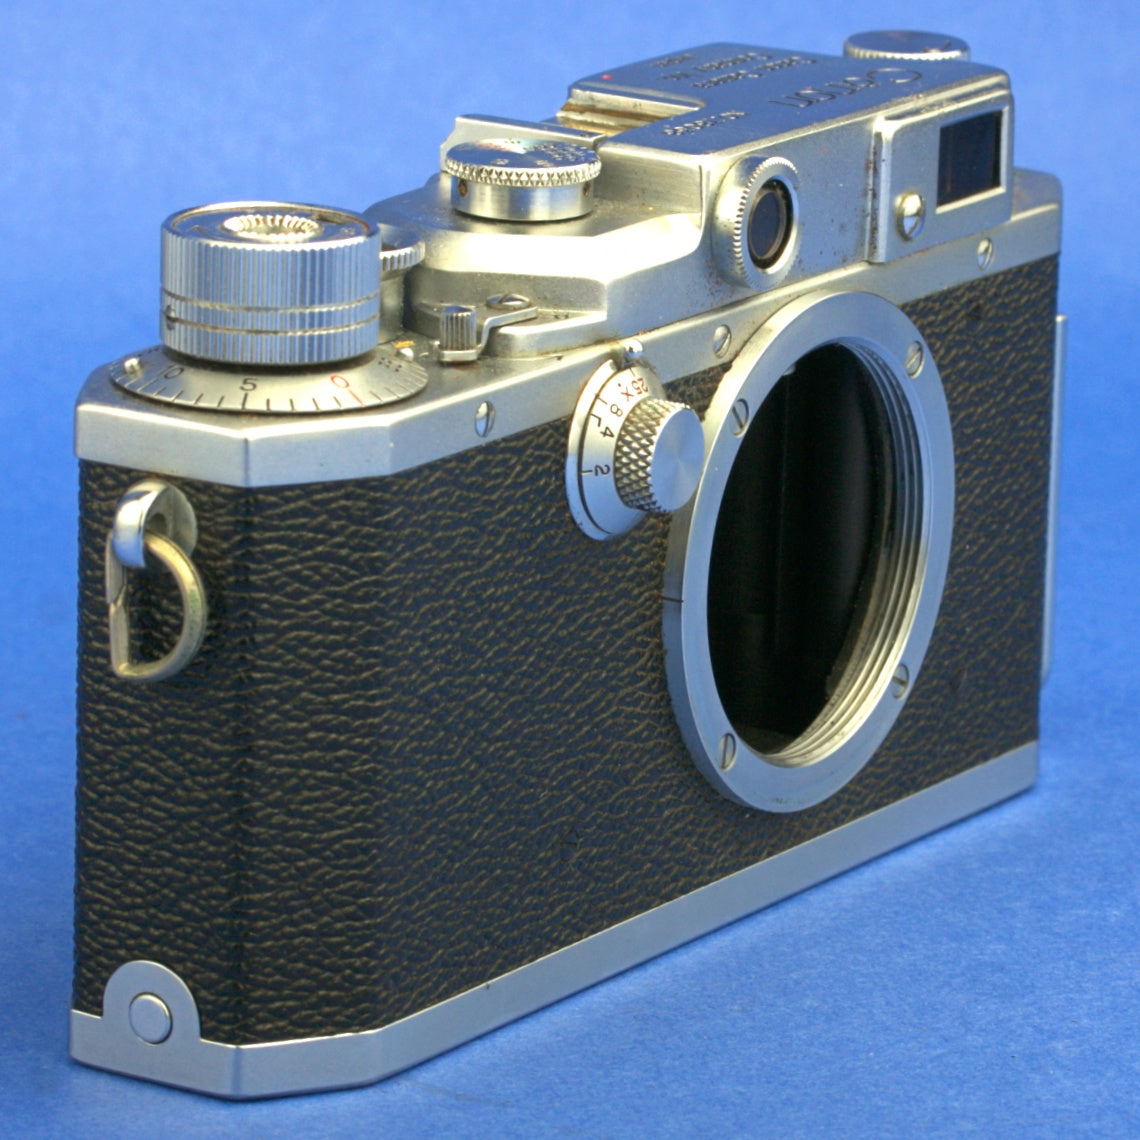 Canon IVSB Rangefinder Camera Body Beautiful Condition